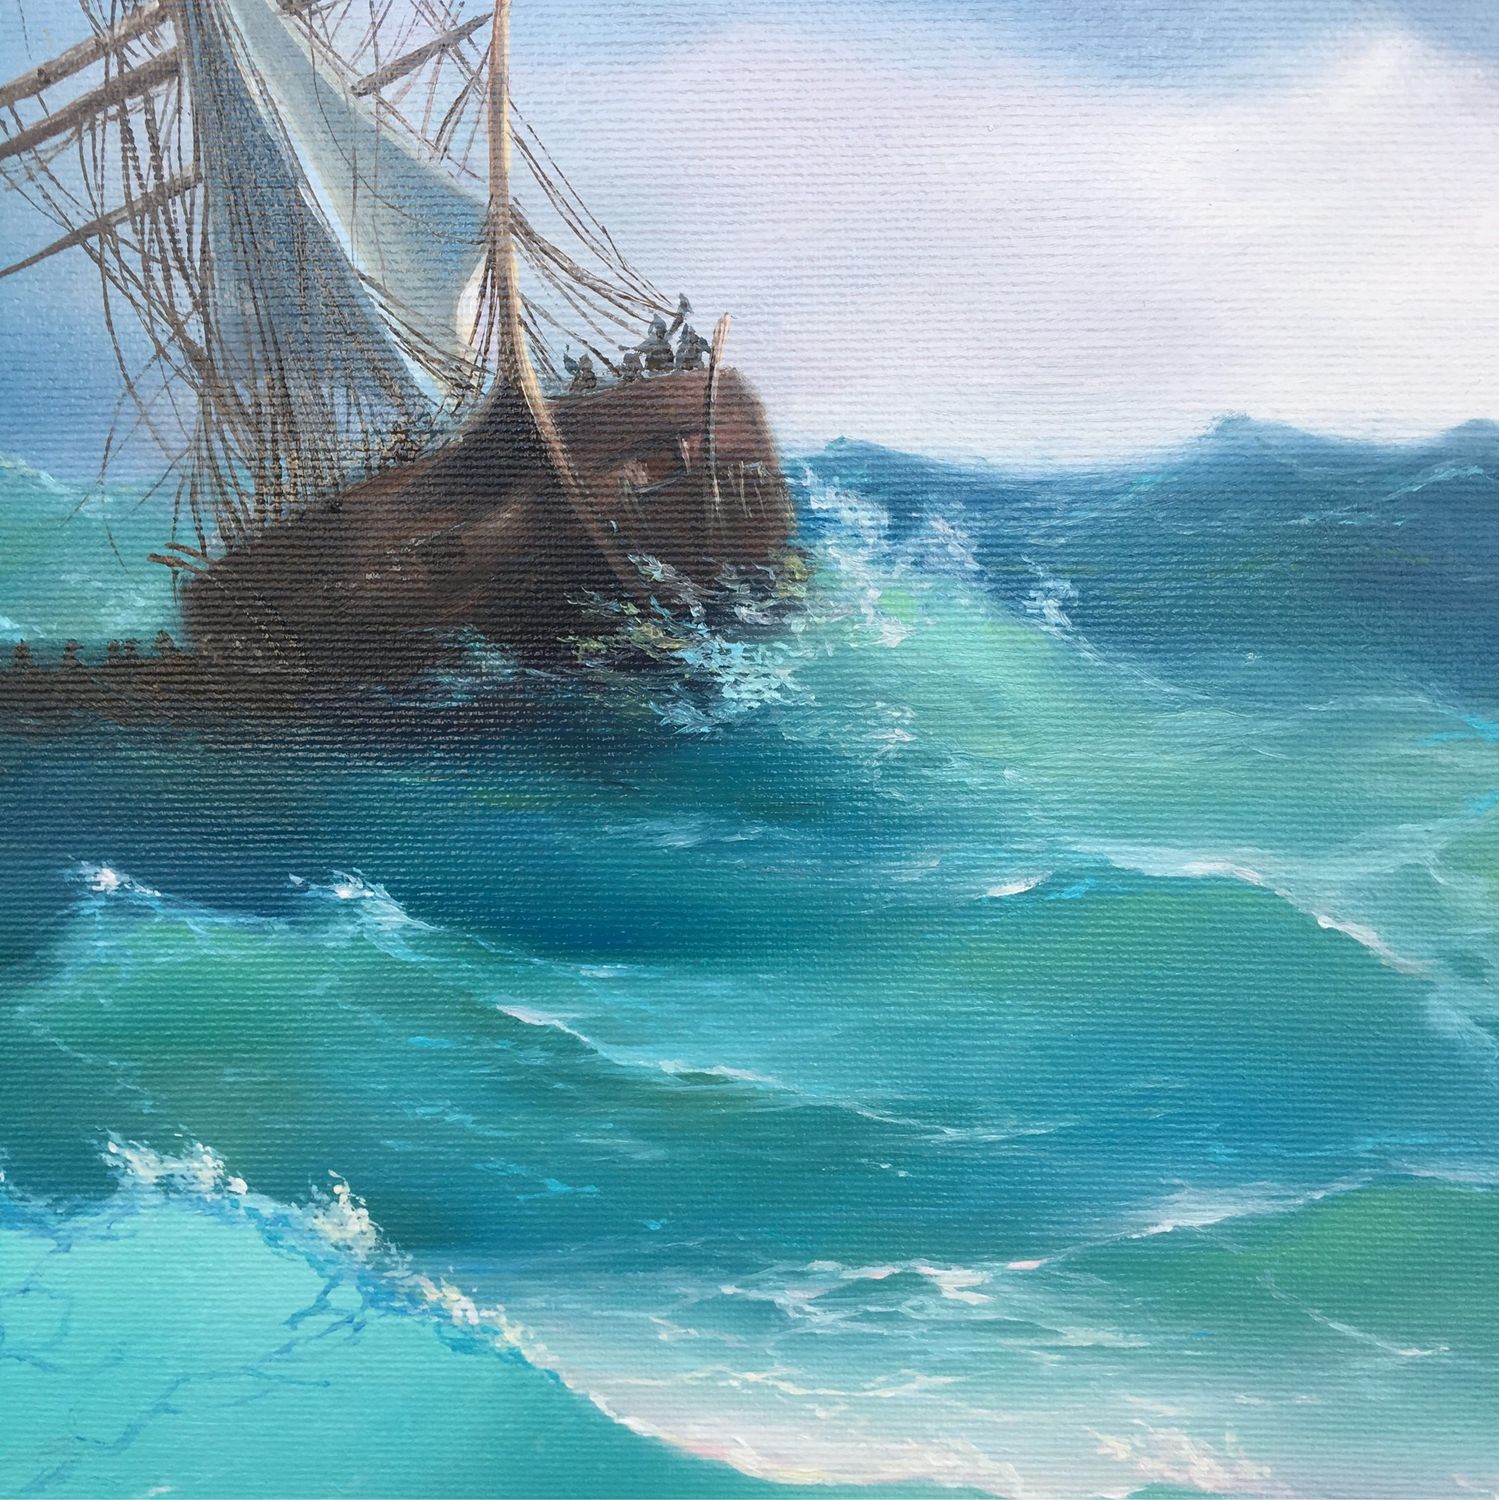 Шторм масло. Морской пейзаж шторм. Море штормит живопись. Морской пейзаж шторм живопись. Картины маслом шторм на море.